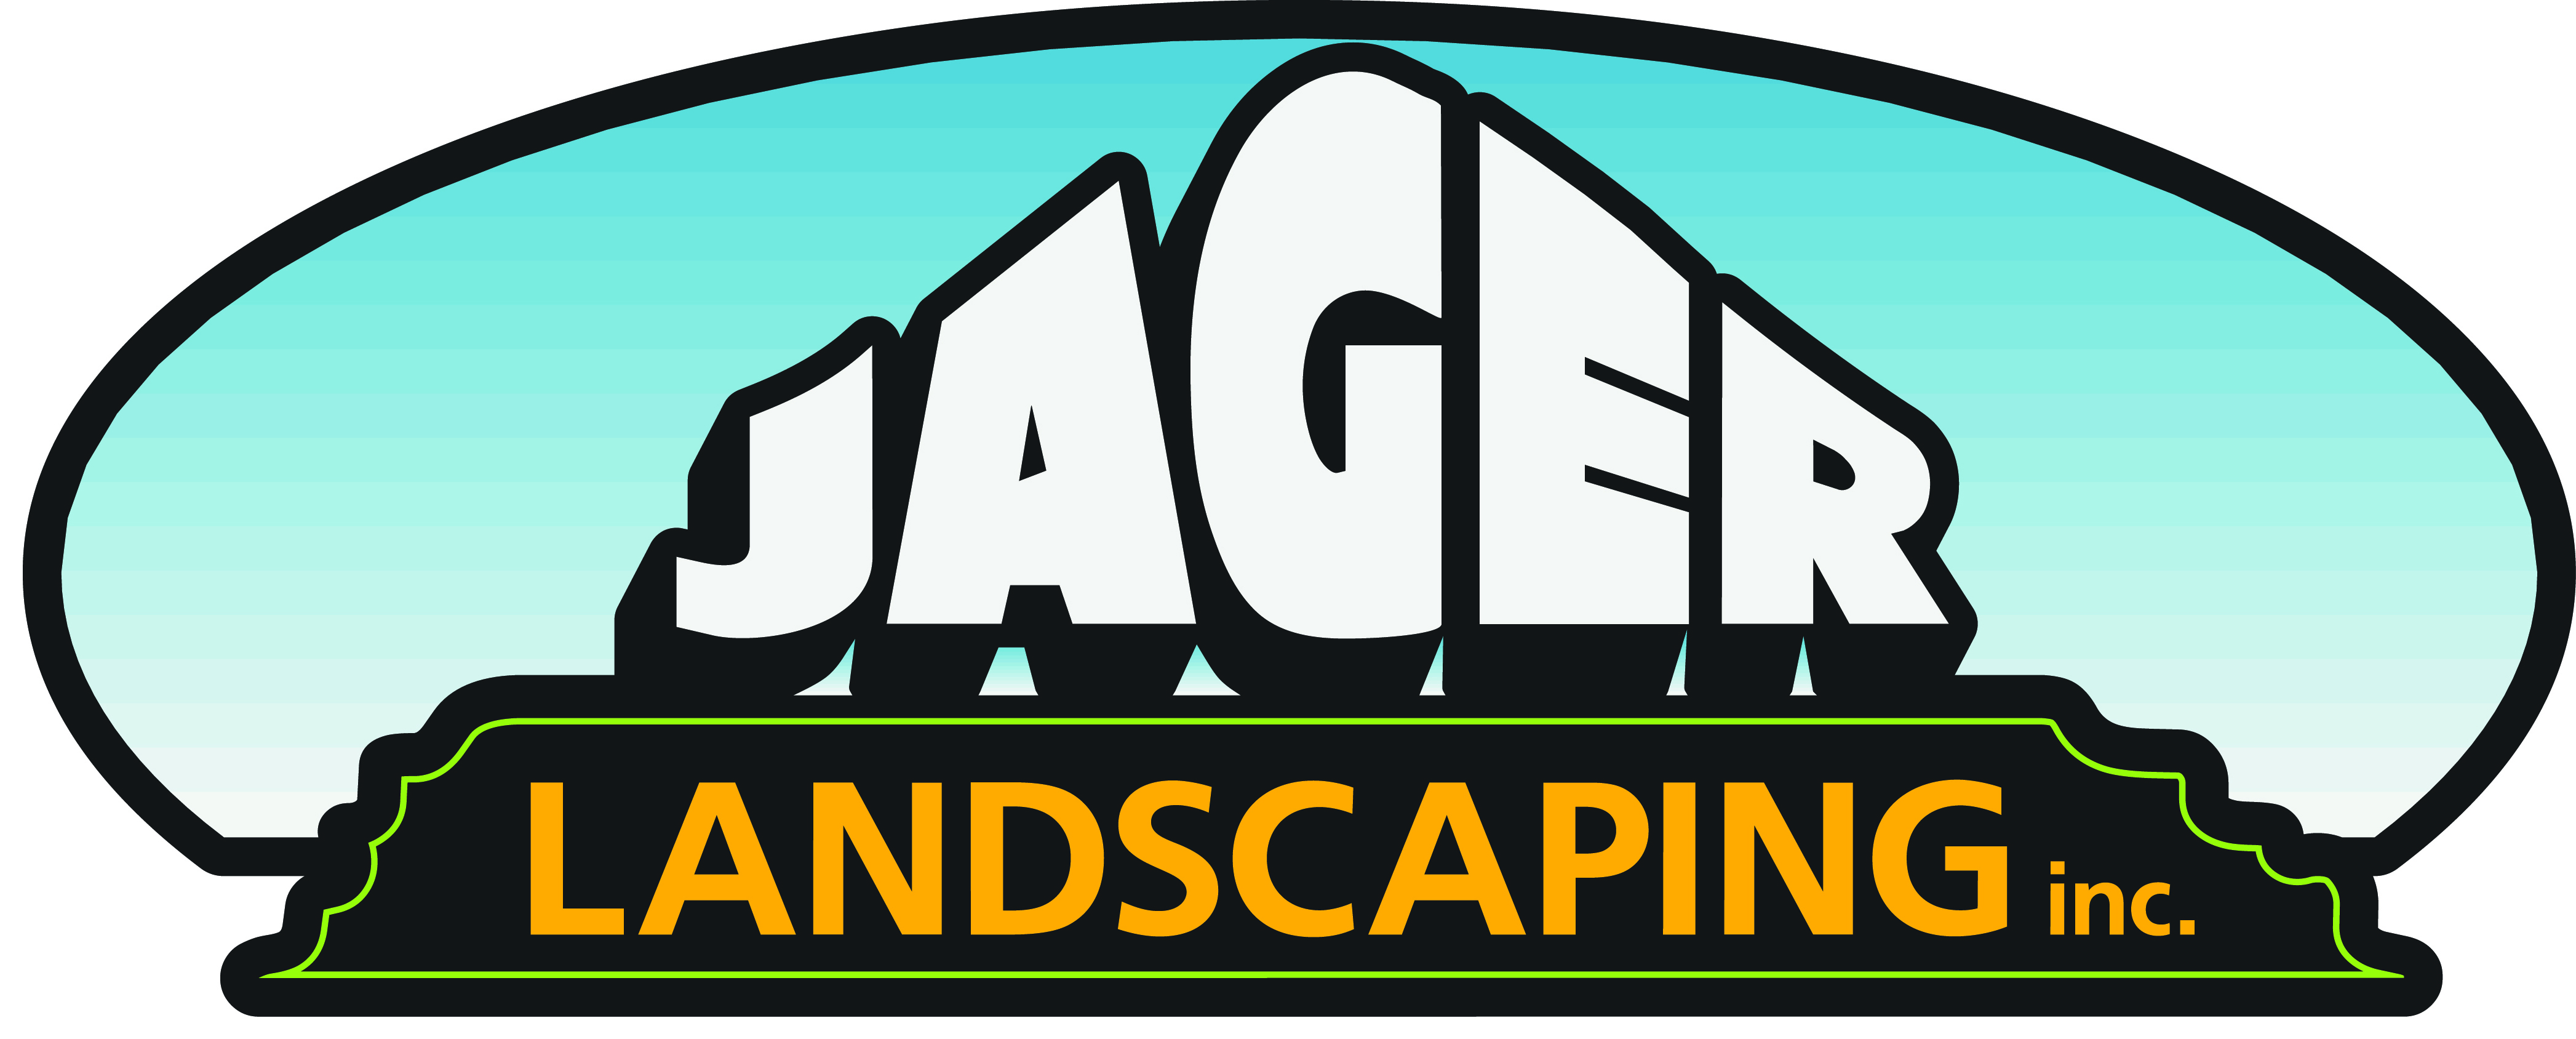 Jager Landscaping, Inc. Logo